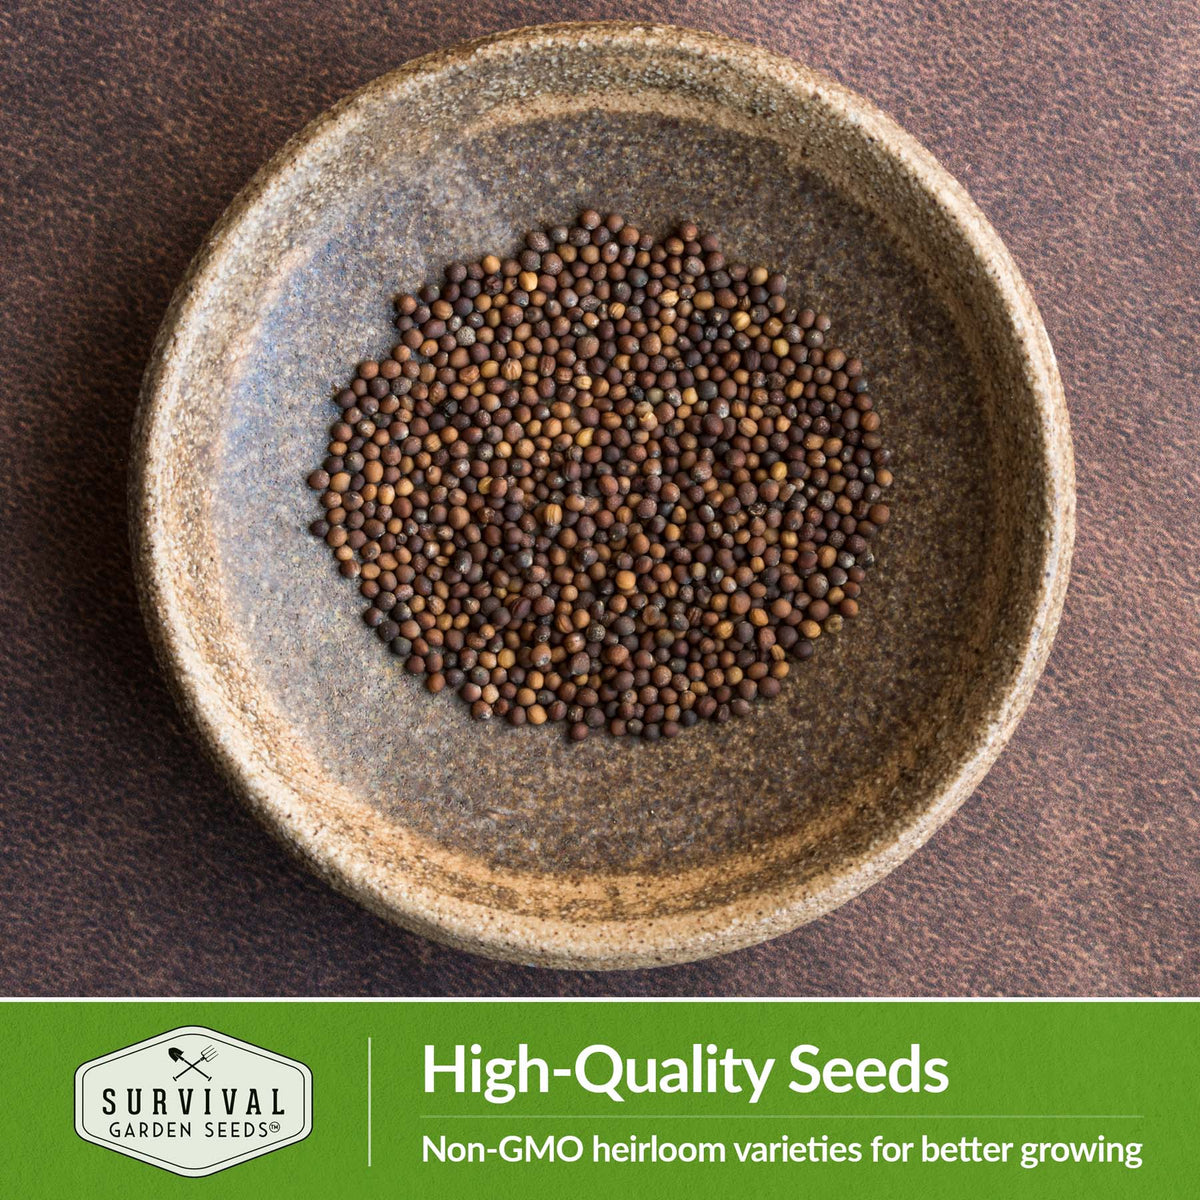 High quality non-GMO seeds